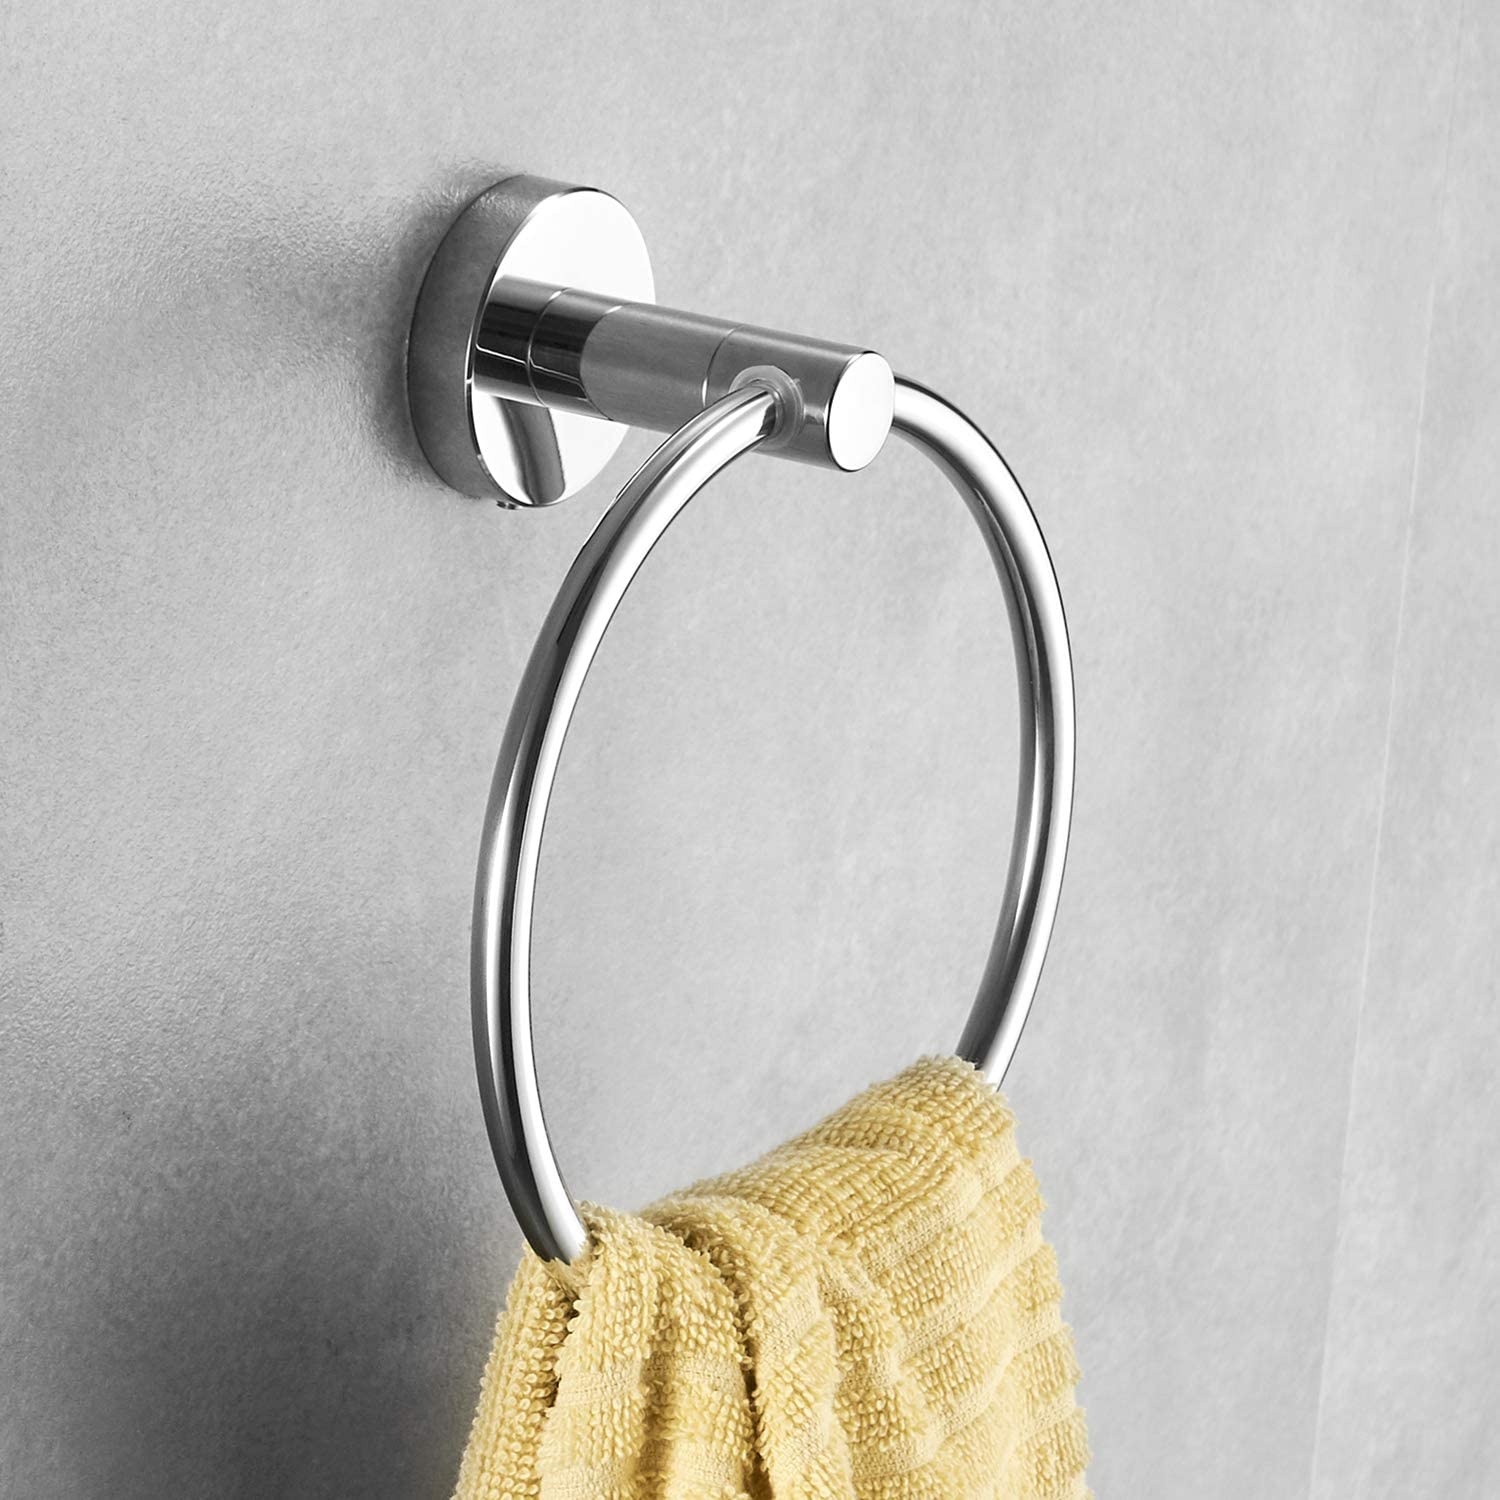 Handdoek Ring Voor Badkamer Ronde Handdoek Ring Cirkel Handdoekhouder Massief Rvs Wandmontage Moderne Badkamer Accessoires